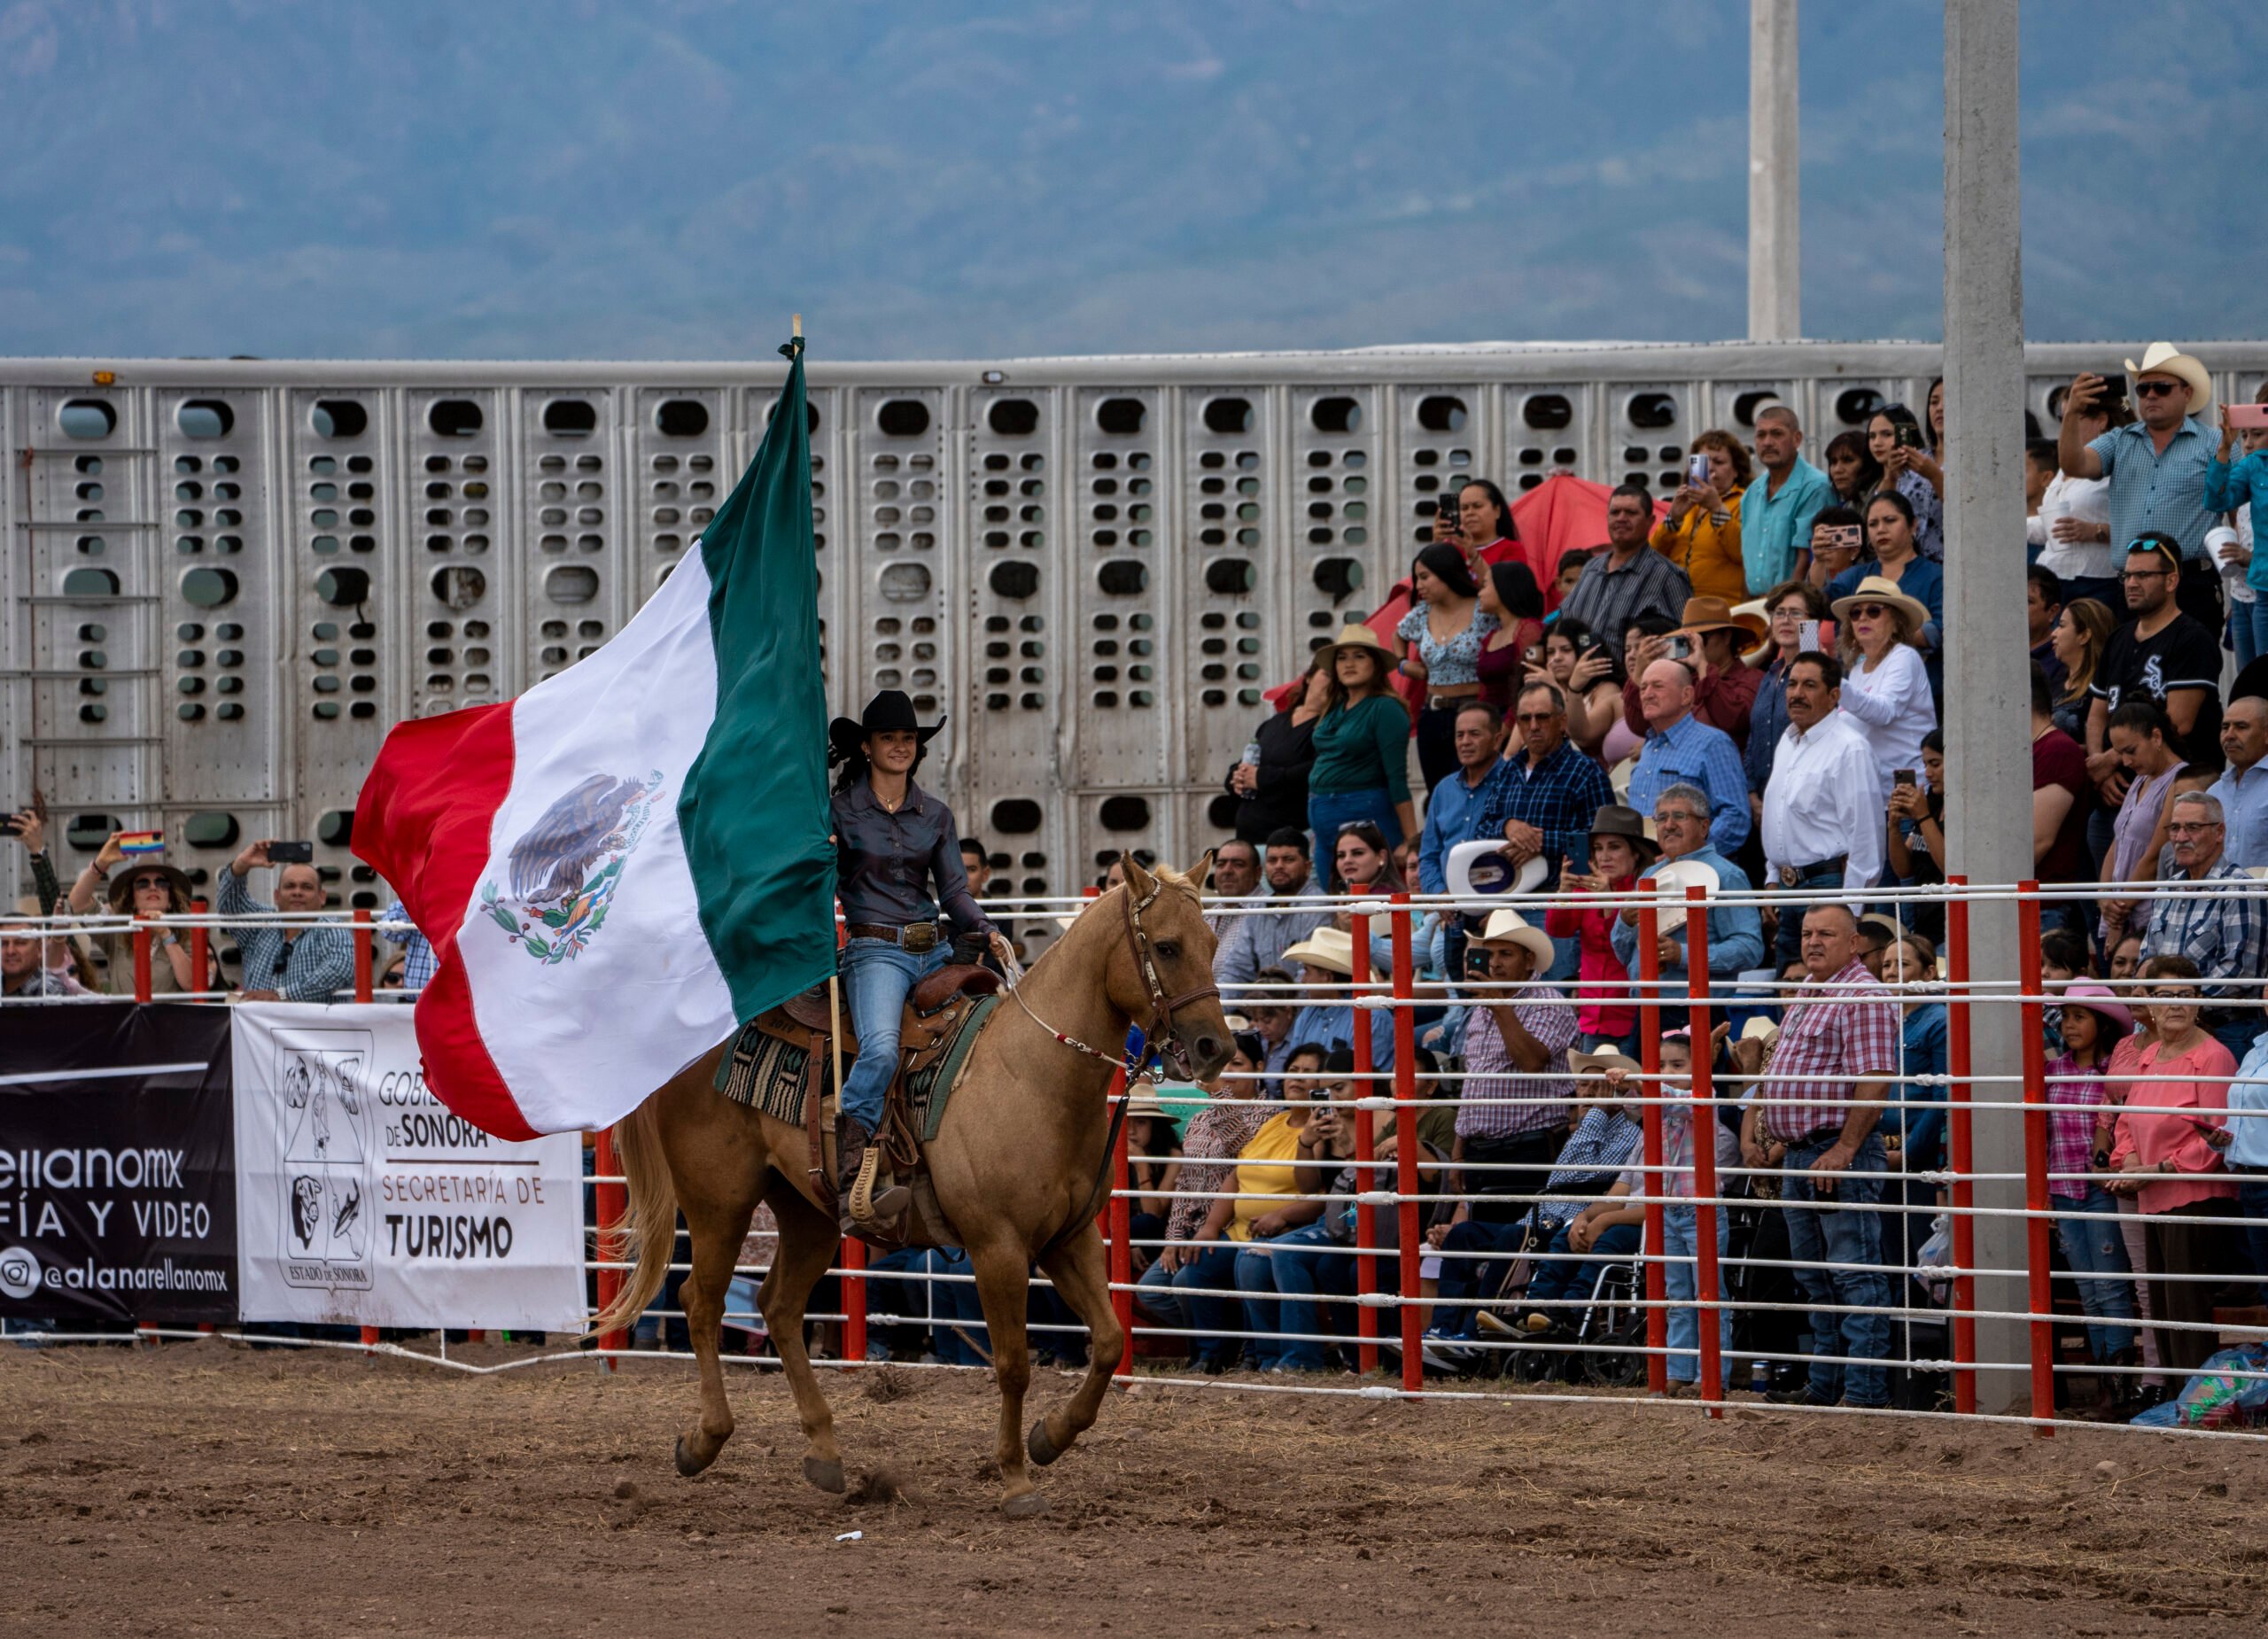 ¡Asiste al Circuito de Rodeo en Hermosillo, Sonora! Escapadas por